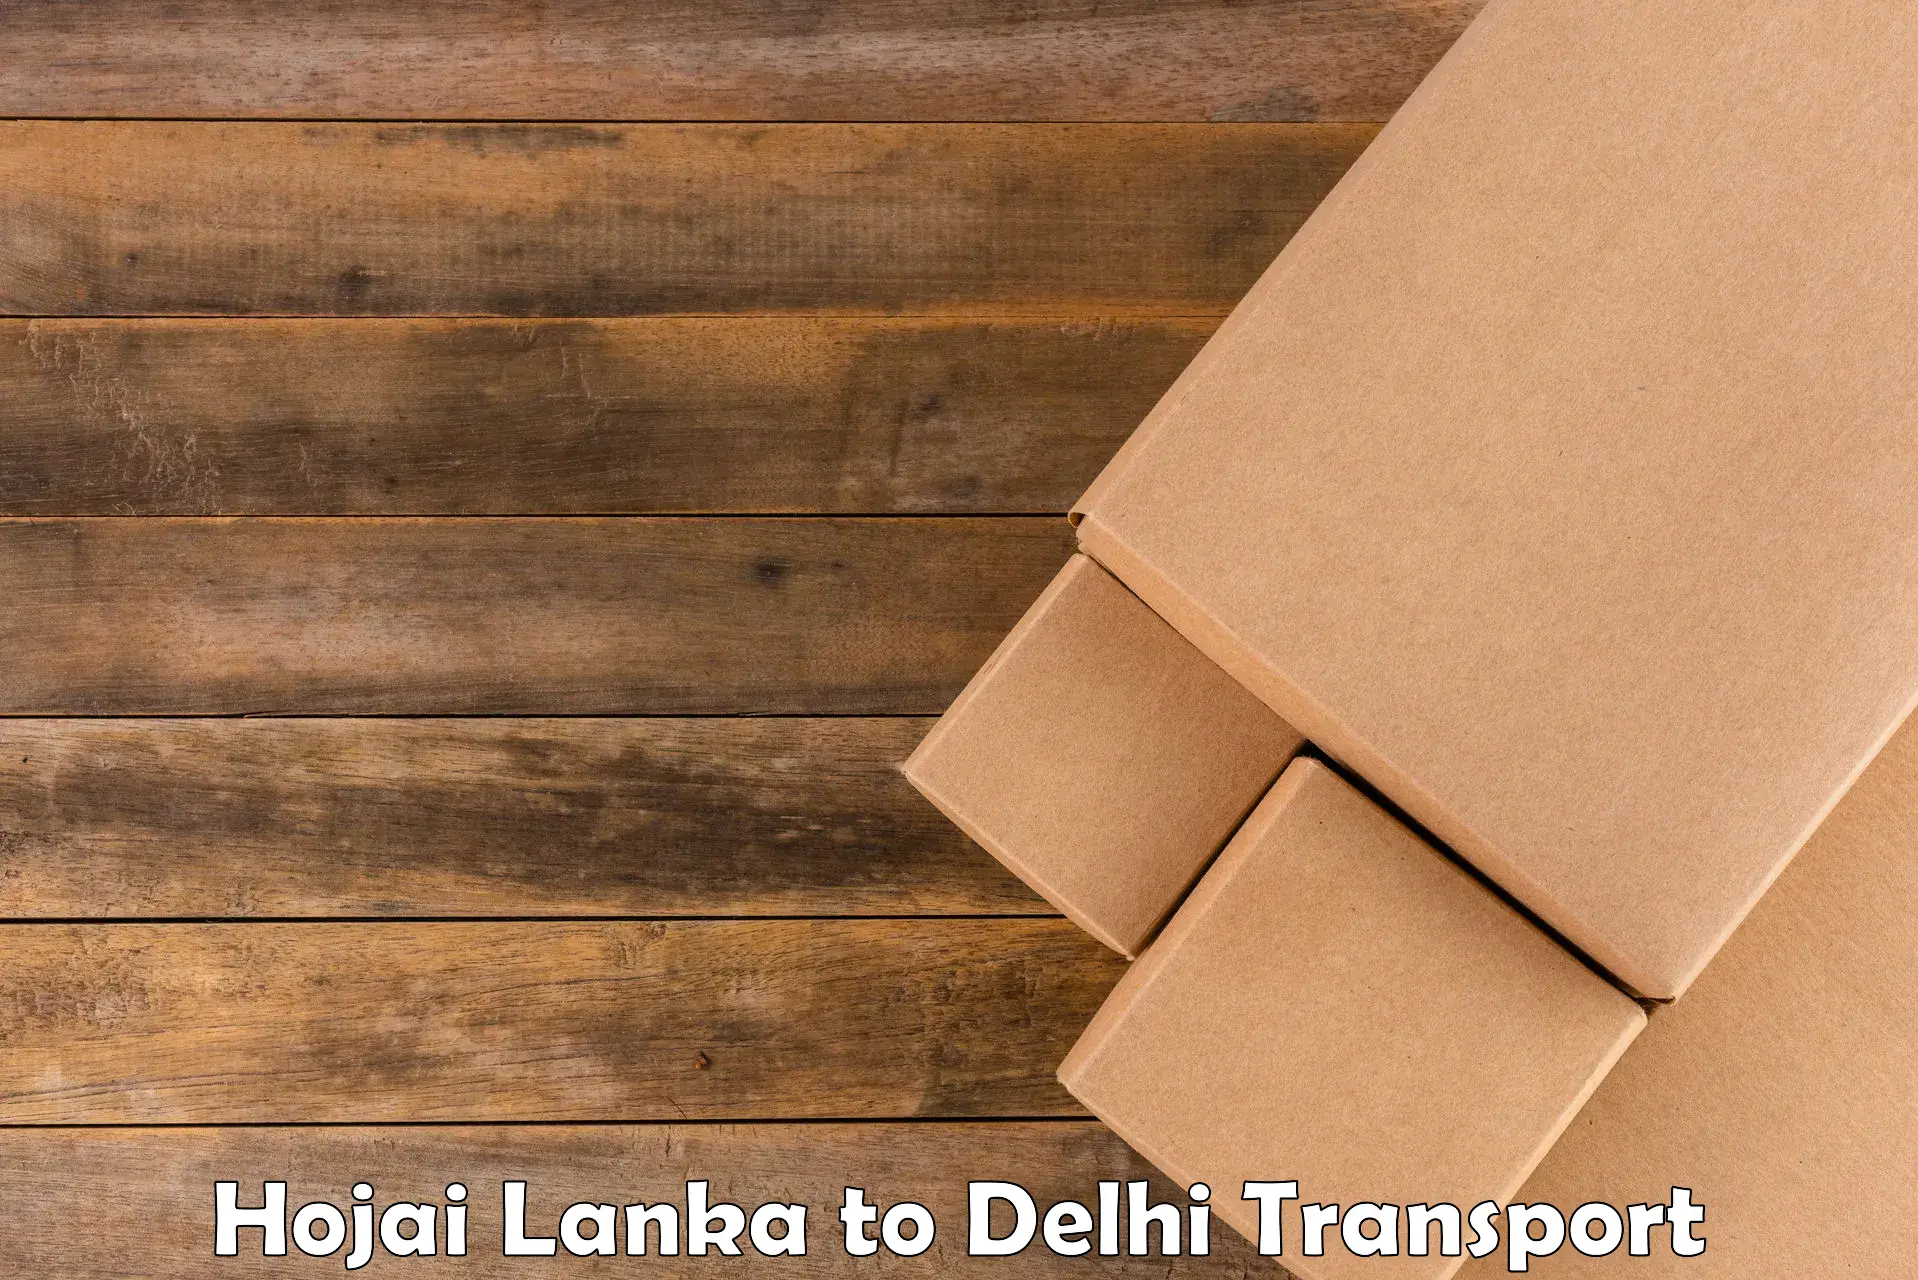 All India transport service Hojai Lanka to University of Delhi